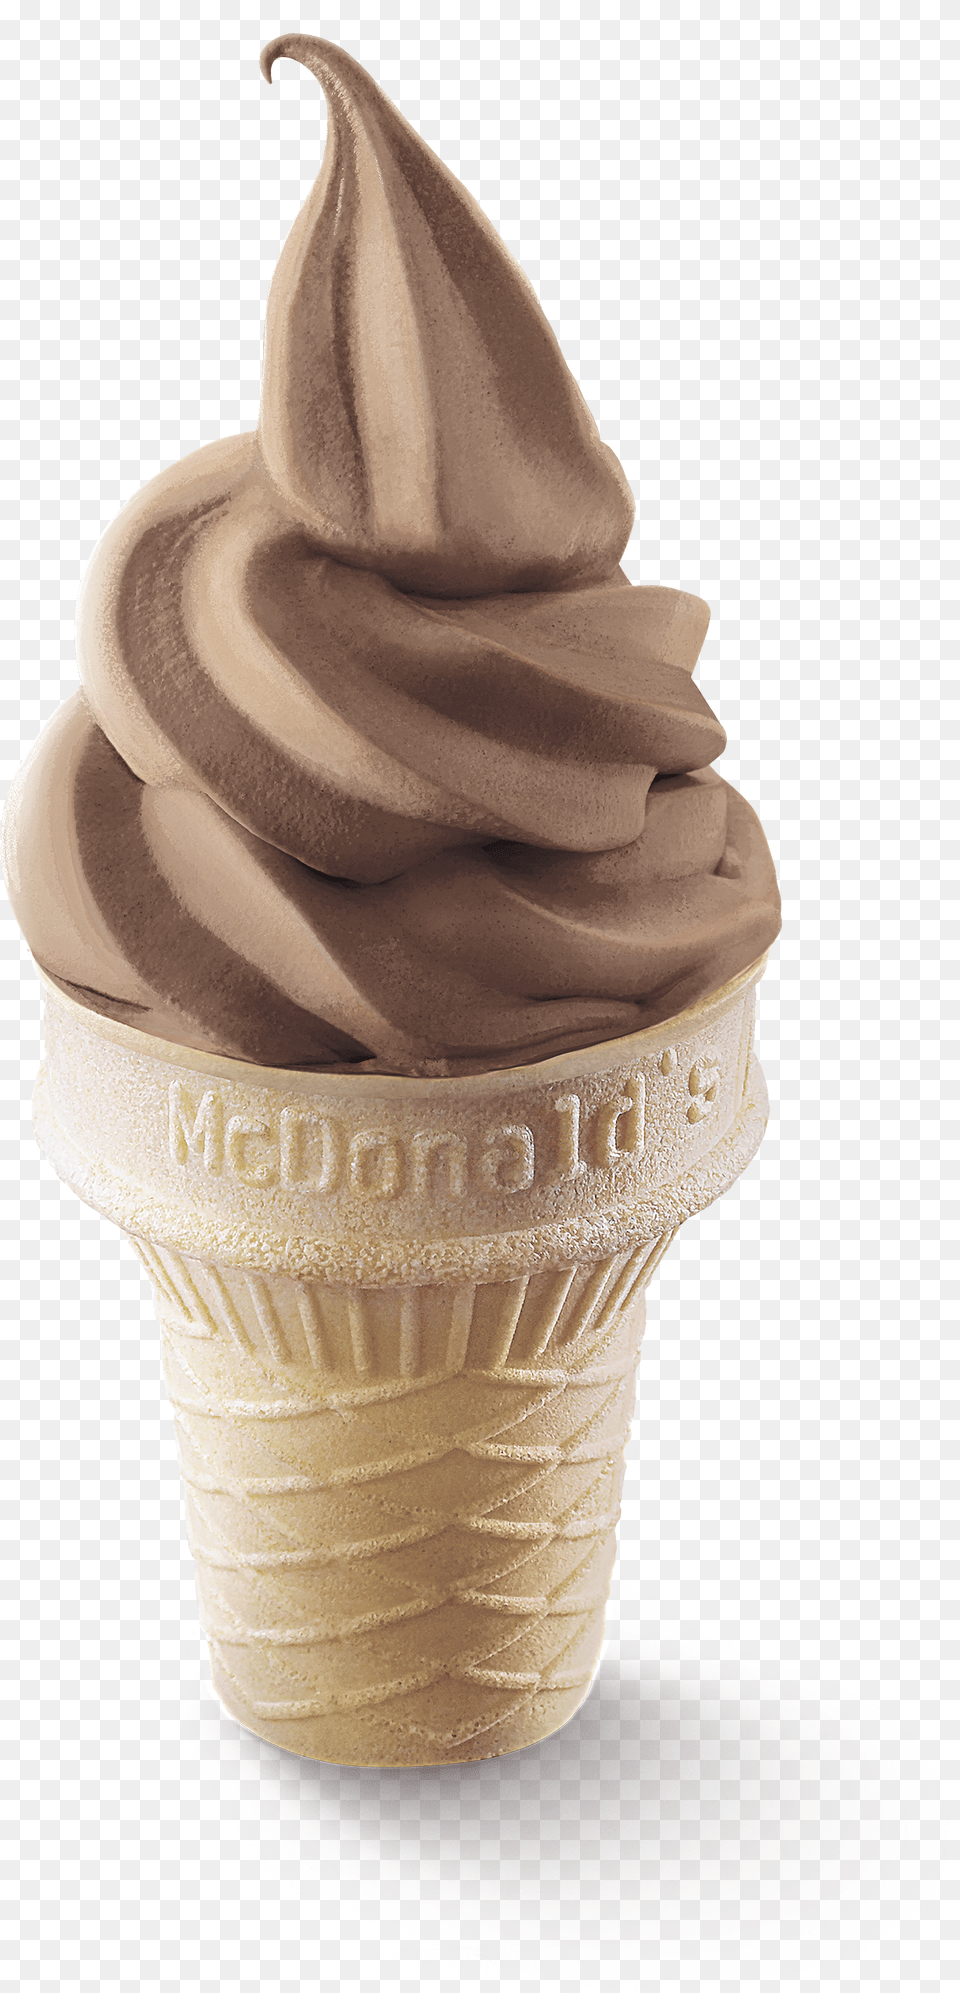 Mcdonald Ice Cream Chocolate Png Image